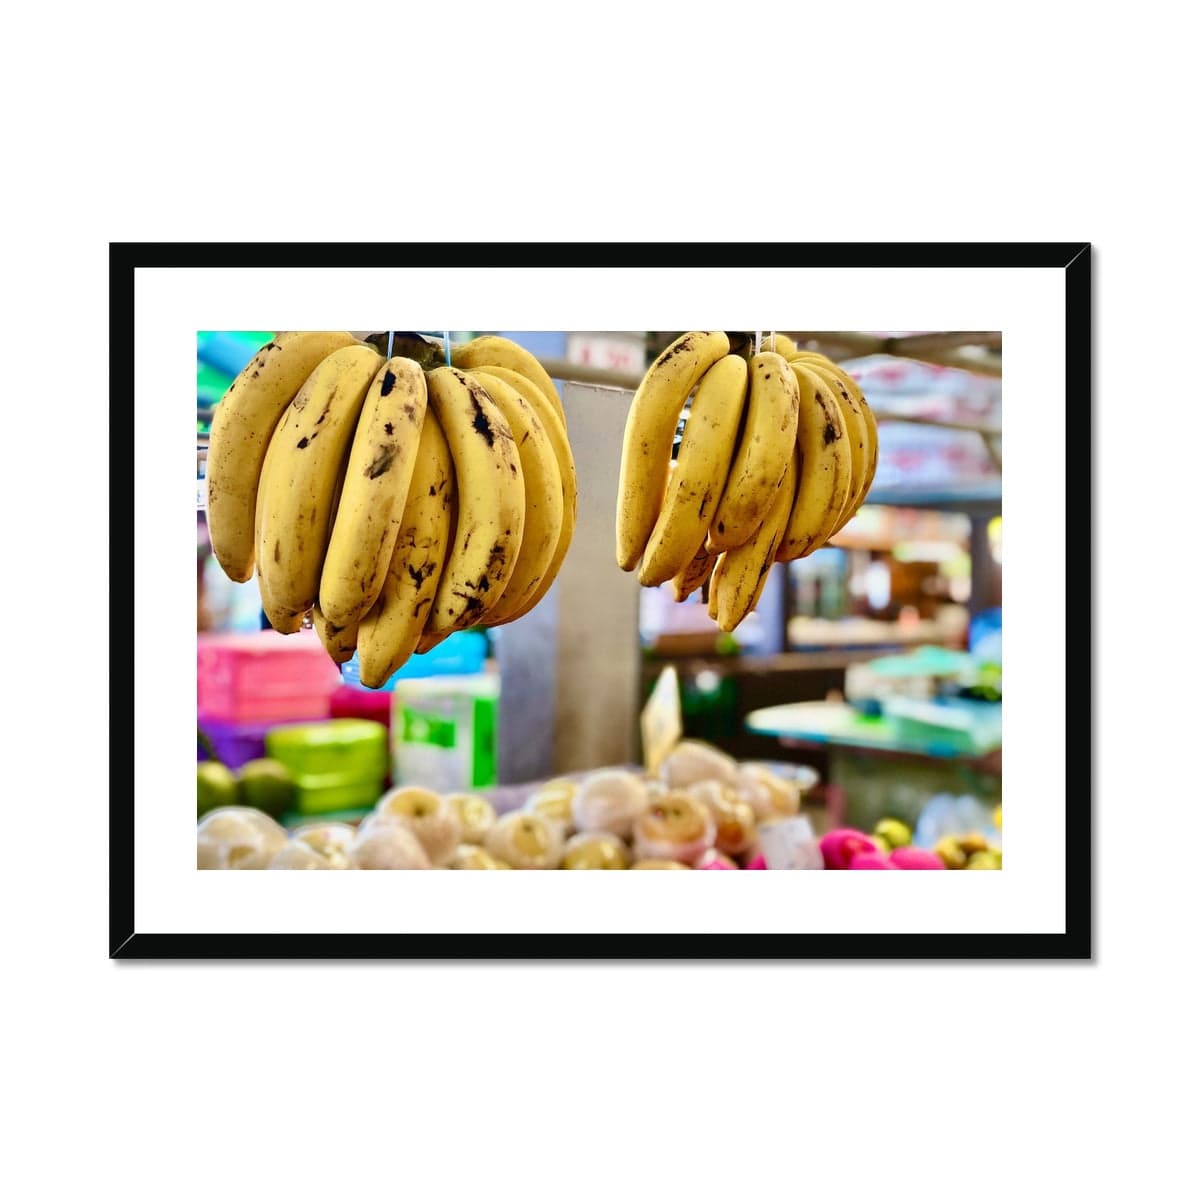 Adam Davies Framed A4 Landscape (29x21cm) / Black Frame Going Bananas Thai Market Framed & Mounted Print